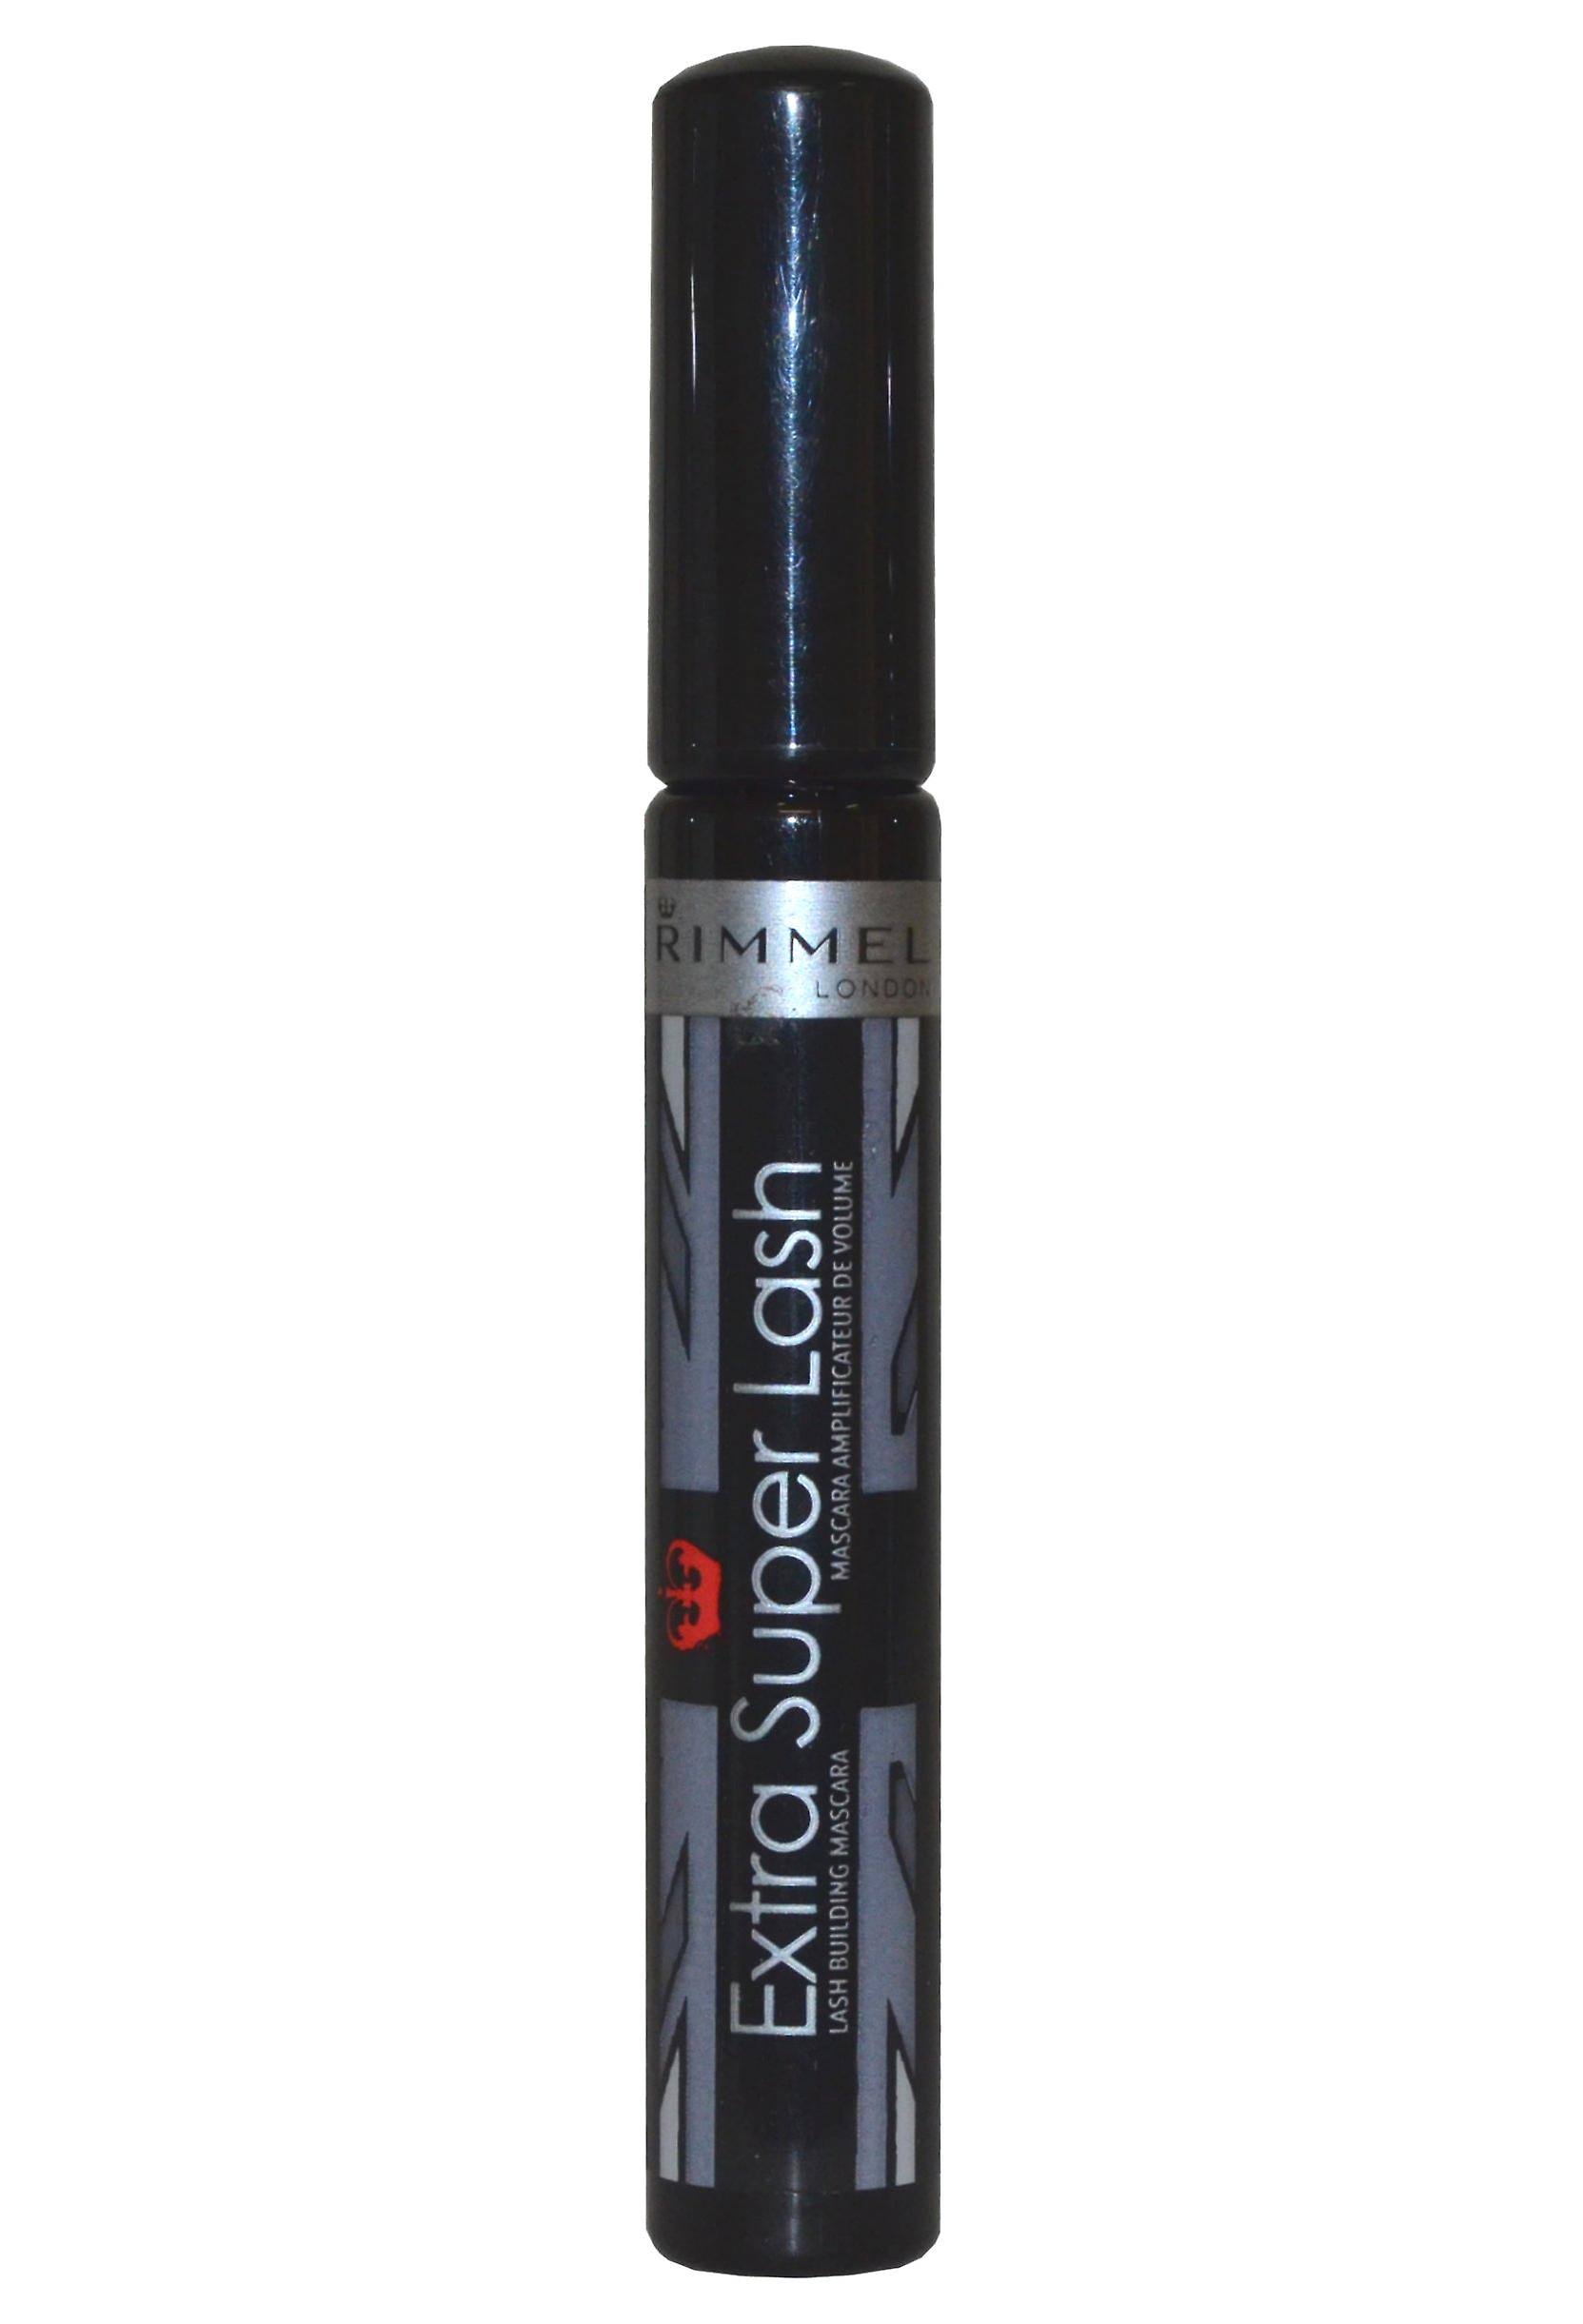 Rimmel London Extra Super Lash Mascara - 102 Brown Black, 8ml